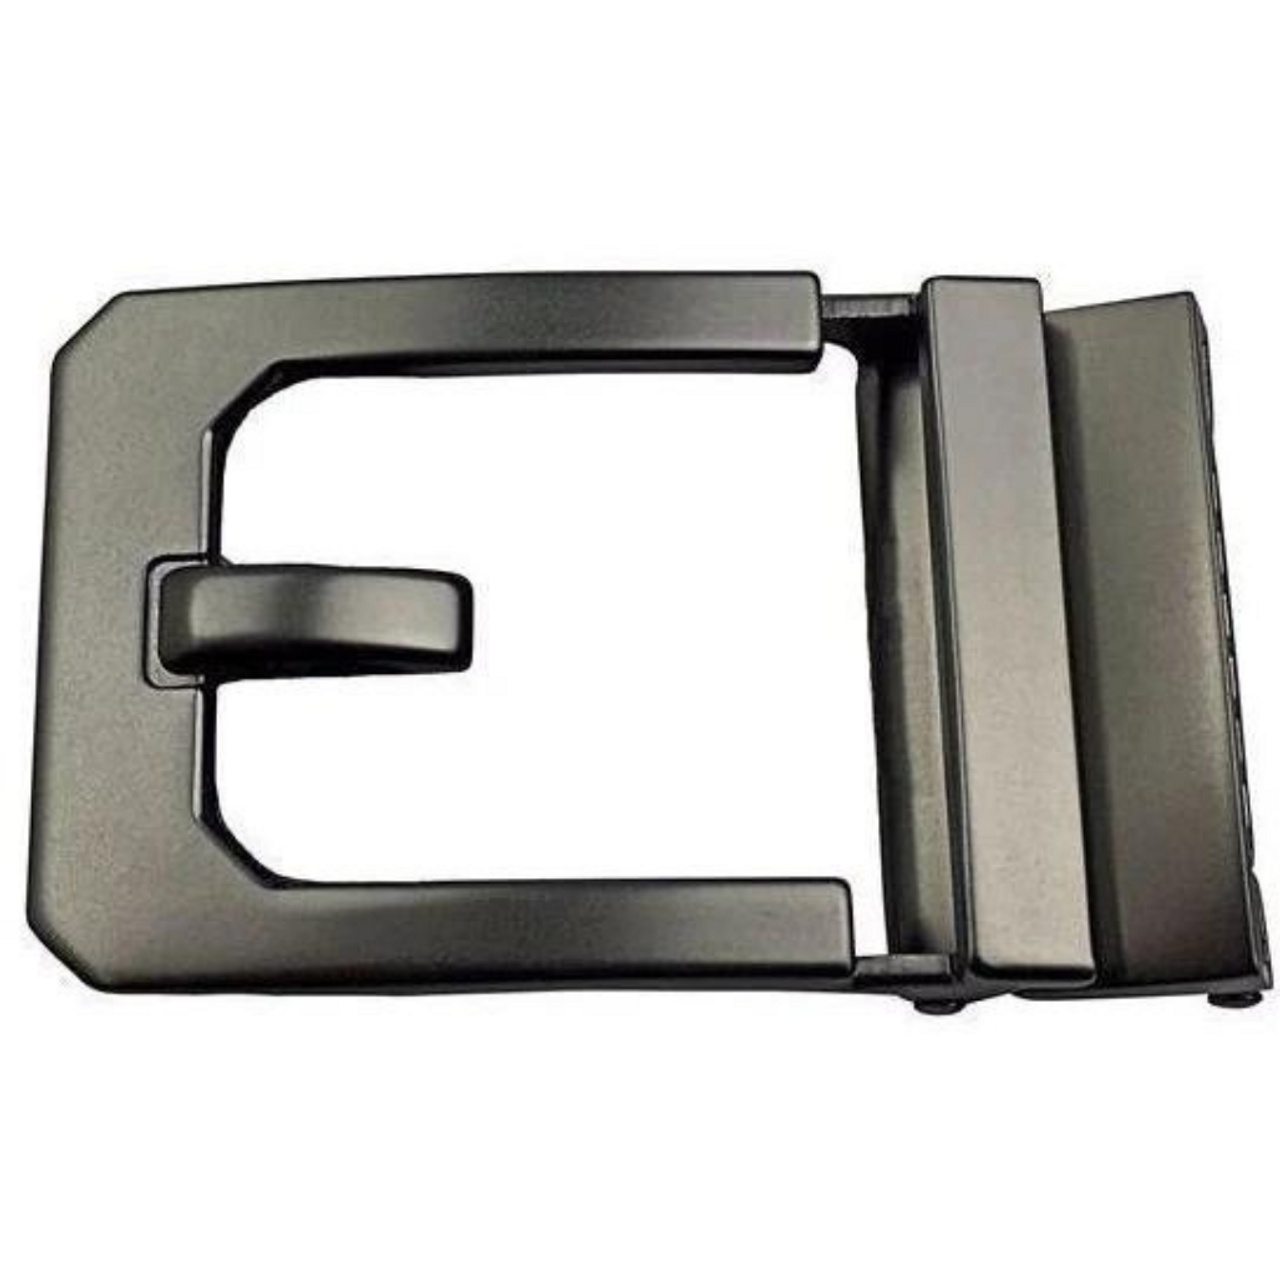 Kore Essentials  #1 Rated Gun Belt X3 Buckle Black Leather Gun Belt